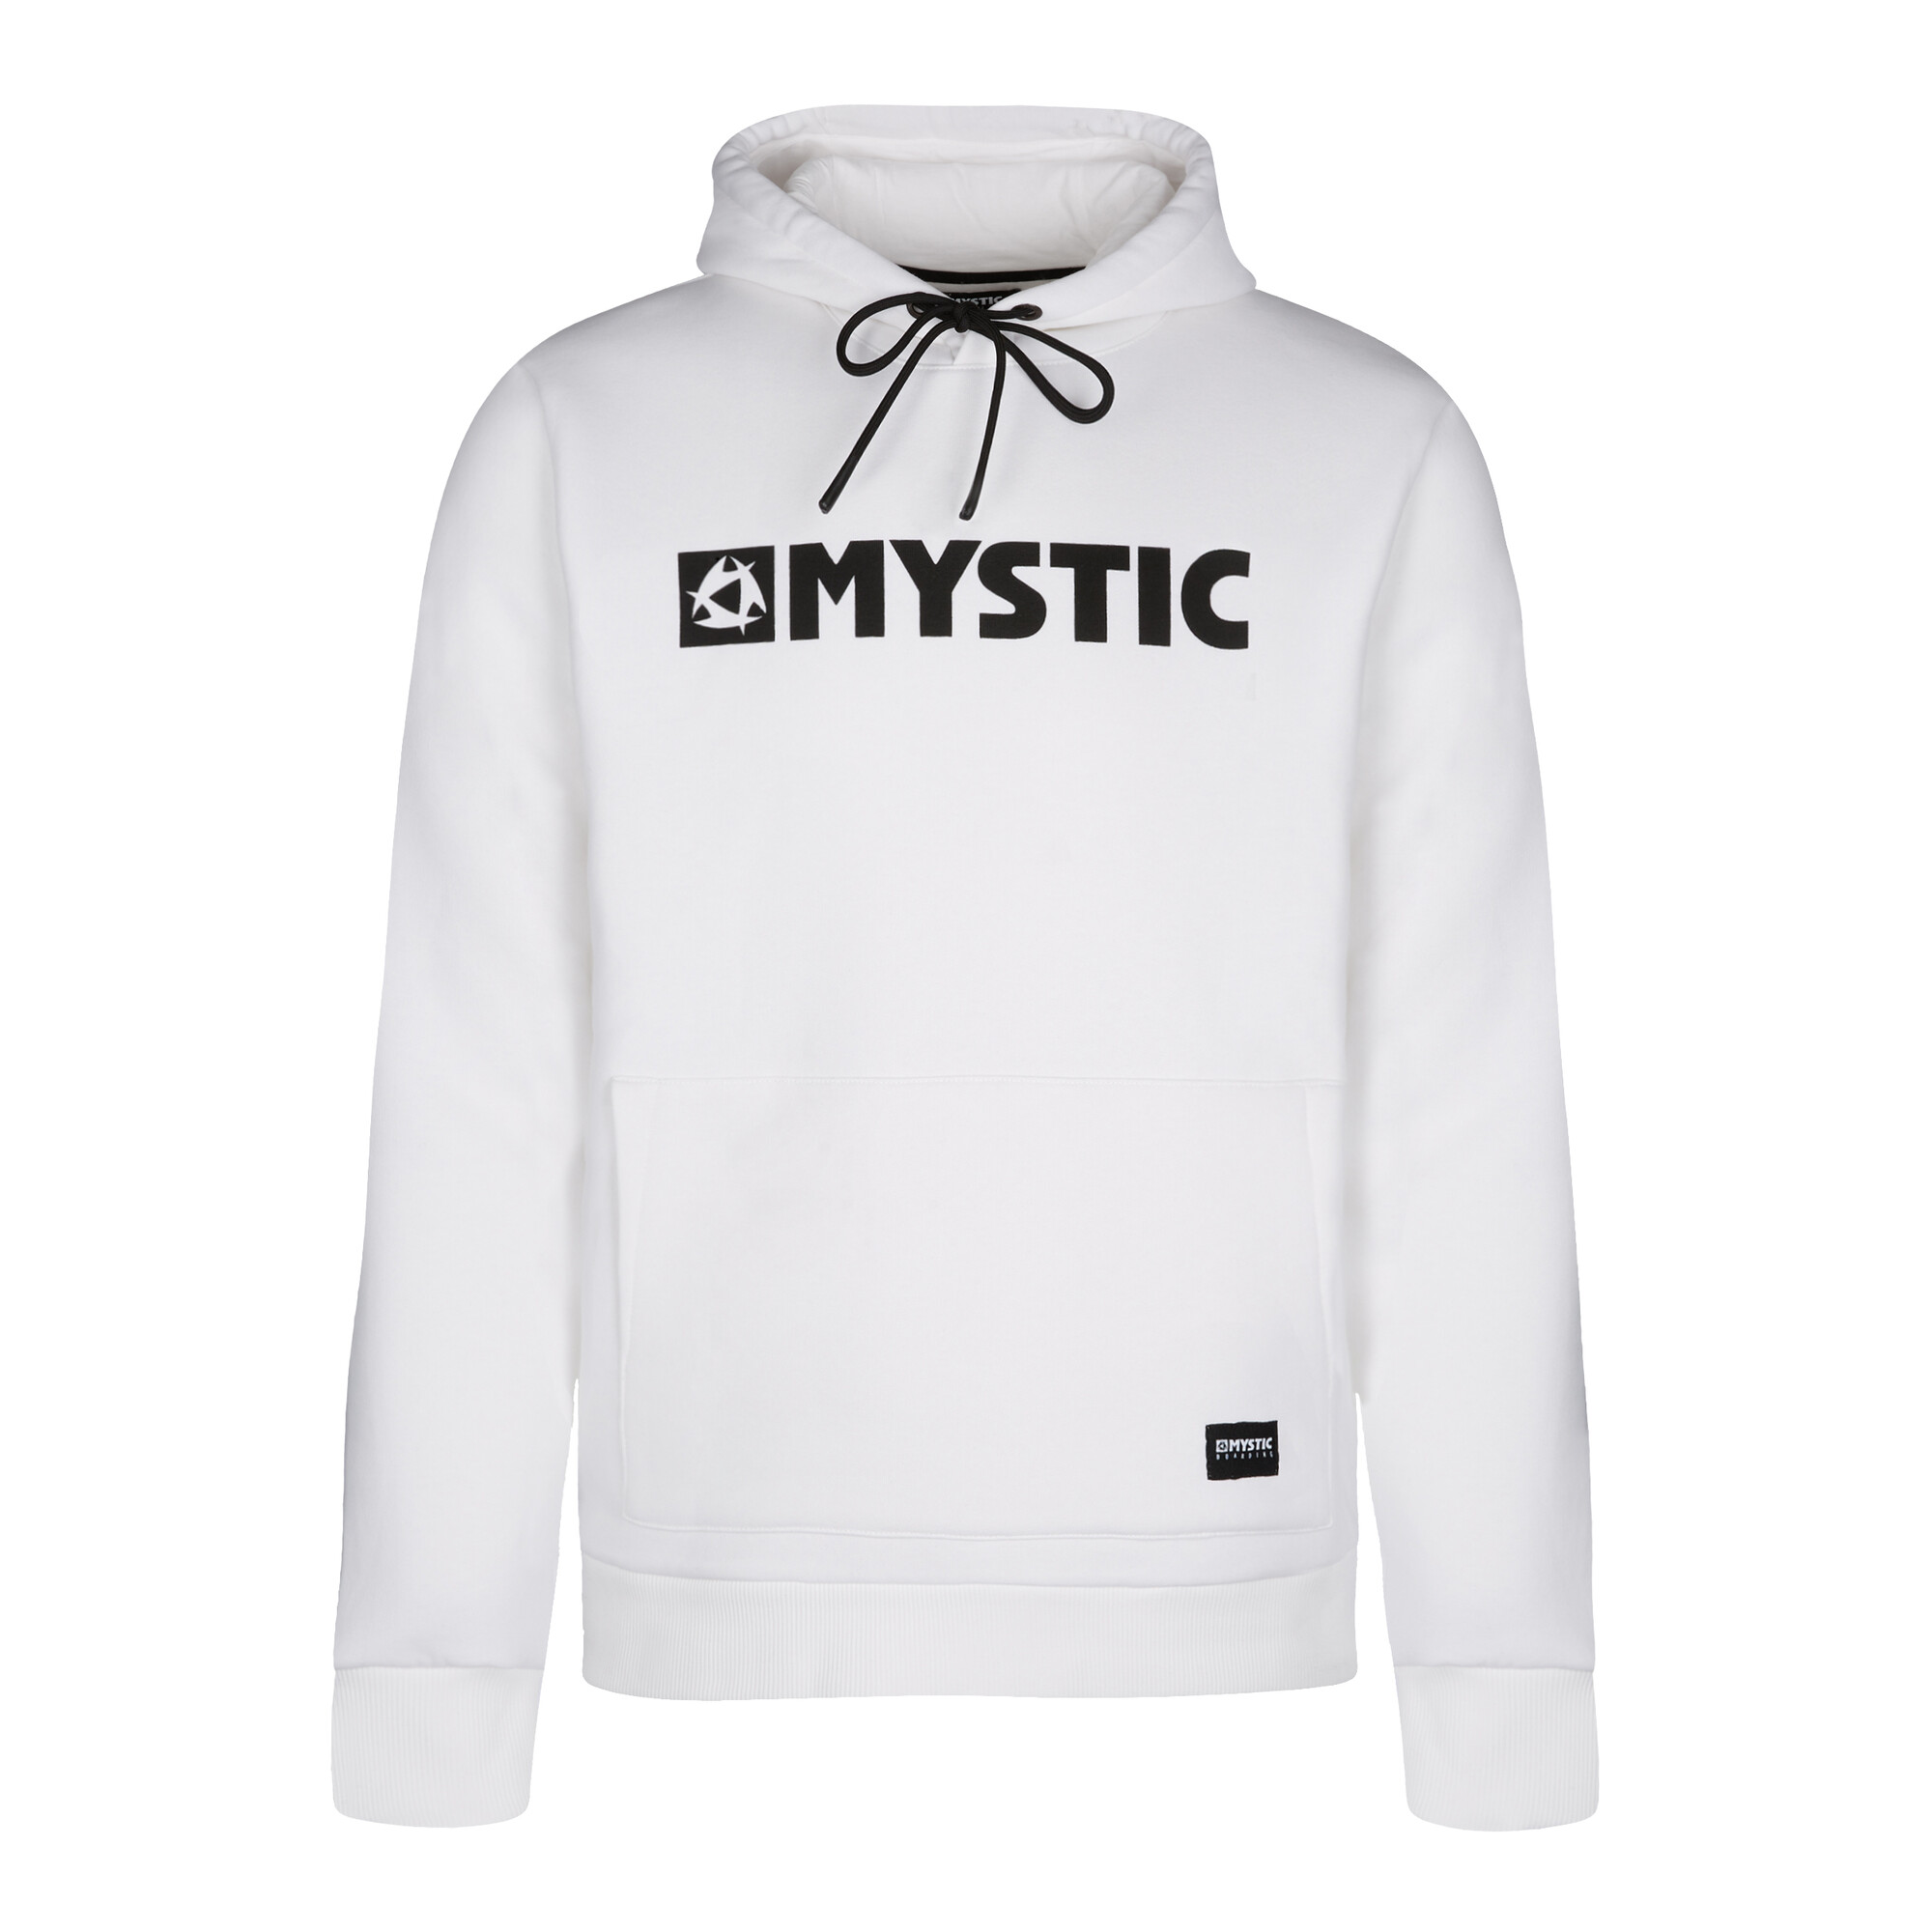 Mystic Brand Hood sweater white